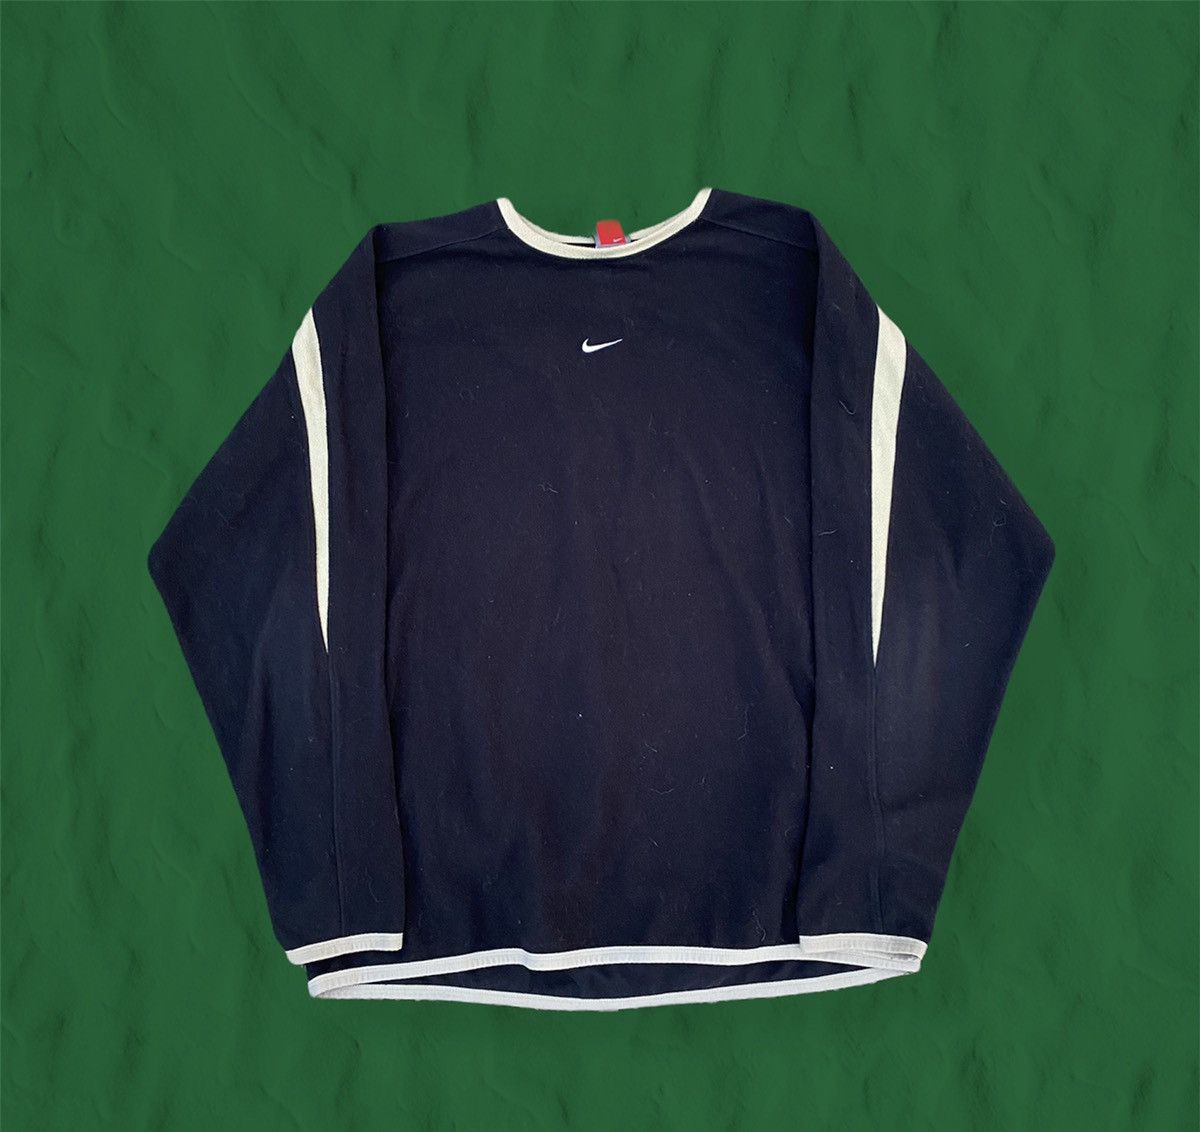 Nike Nike center swoosh sweater | Grailed